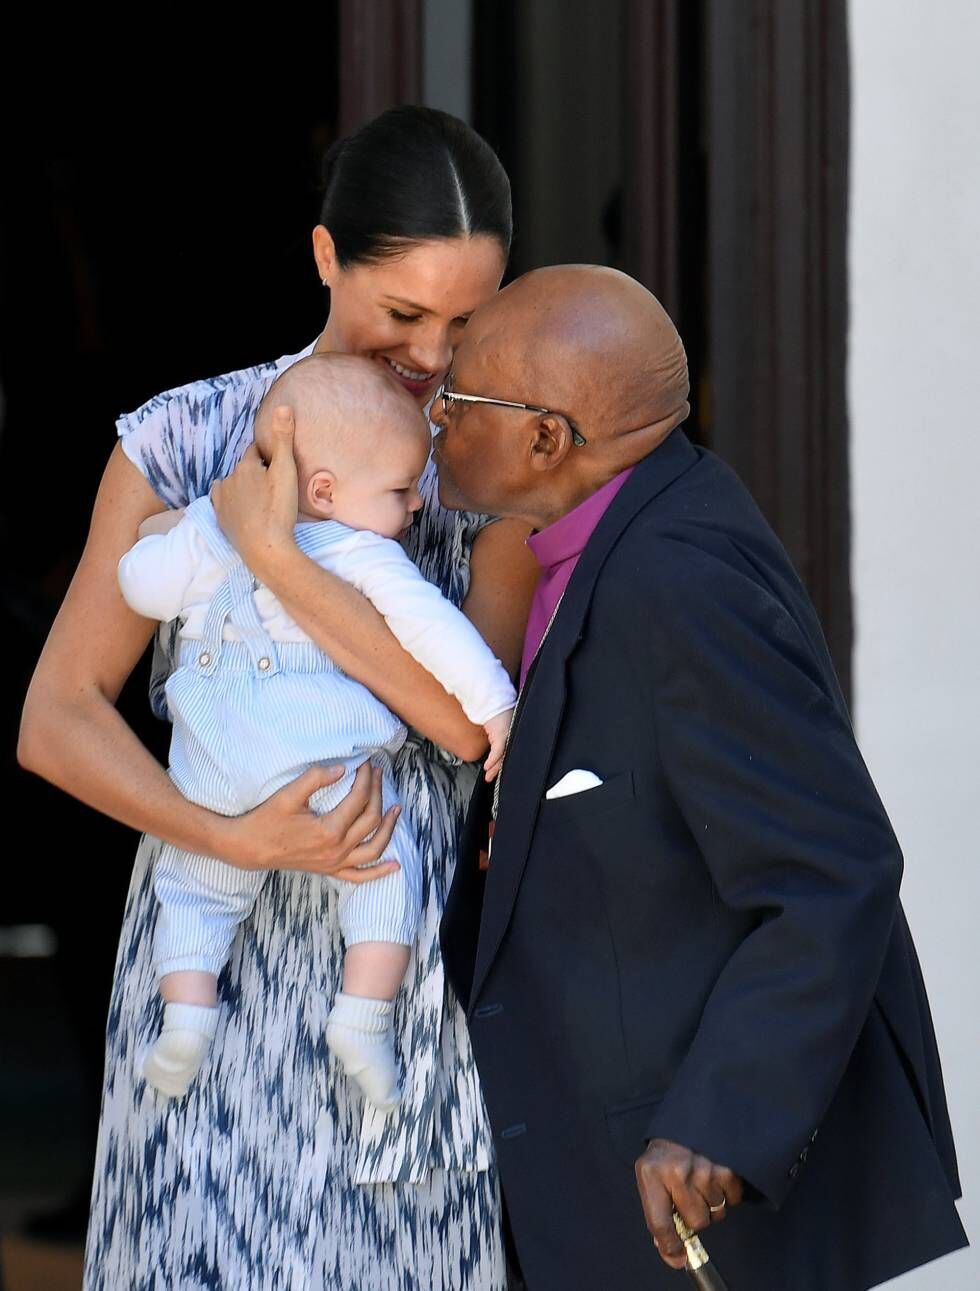 Arcebispo Desmond Tutu beija Archie, que estava no colo da mãe, Meghan